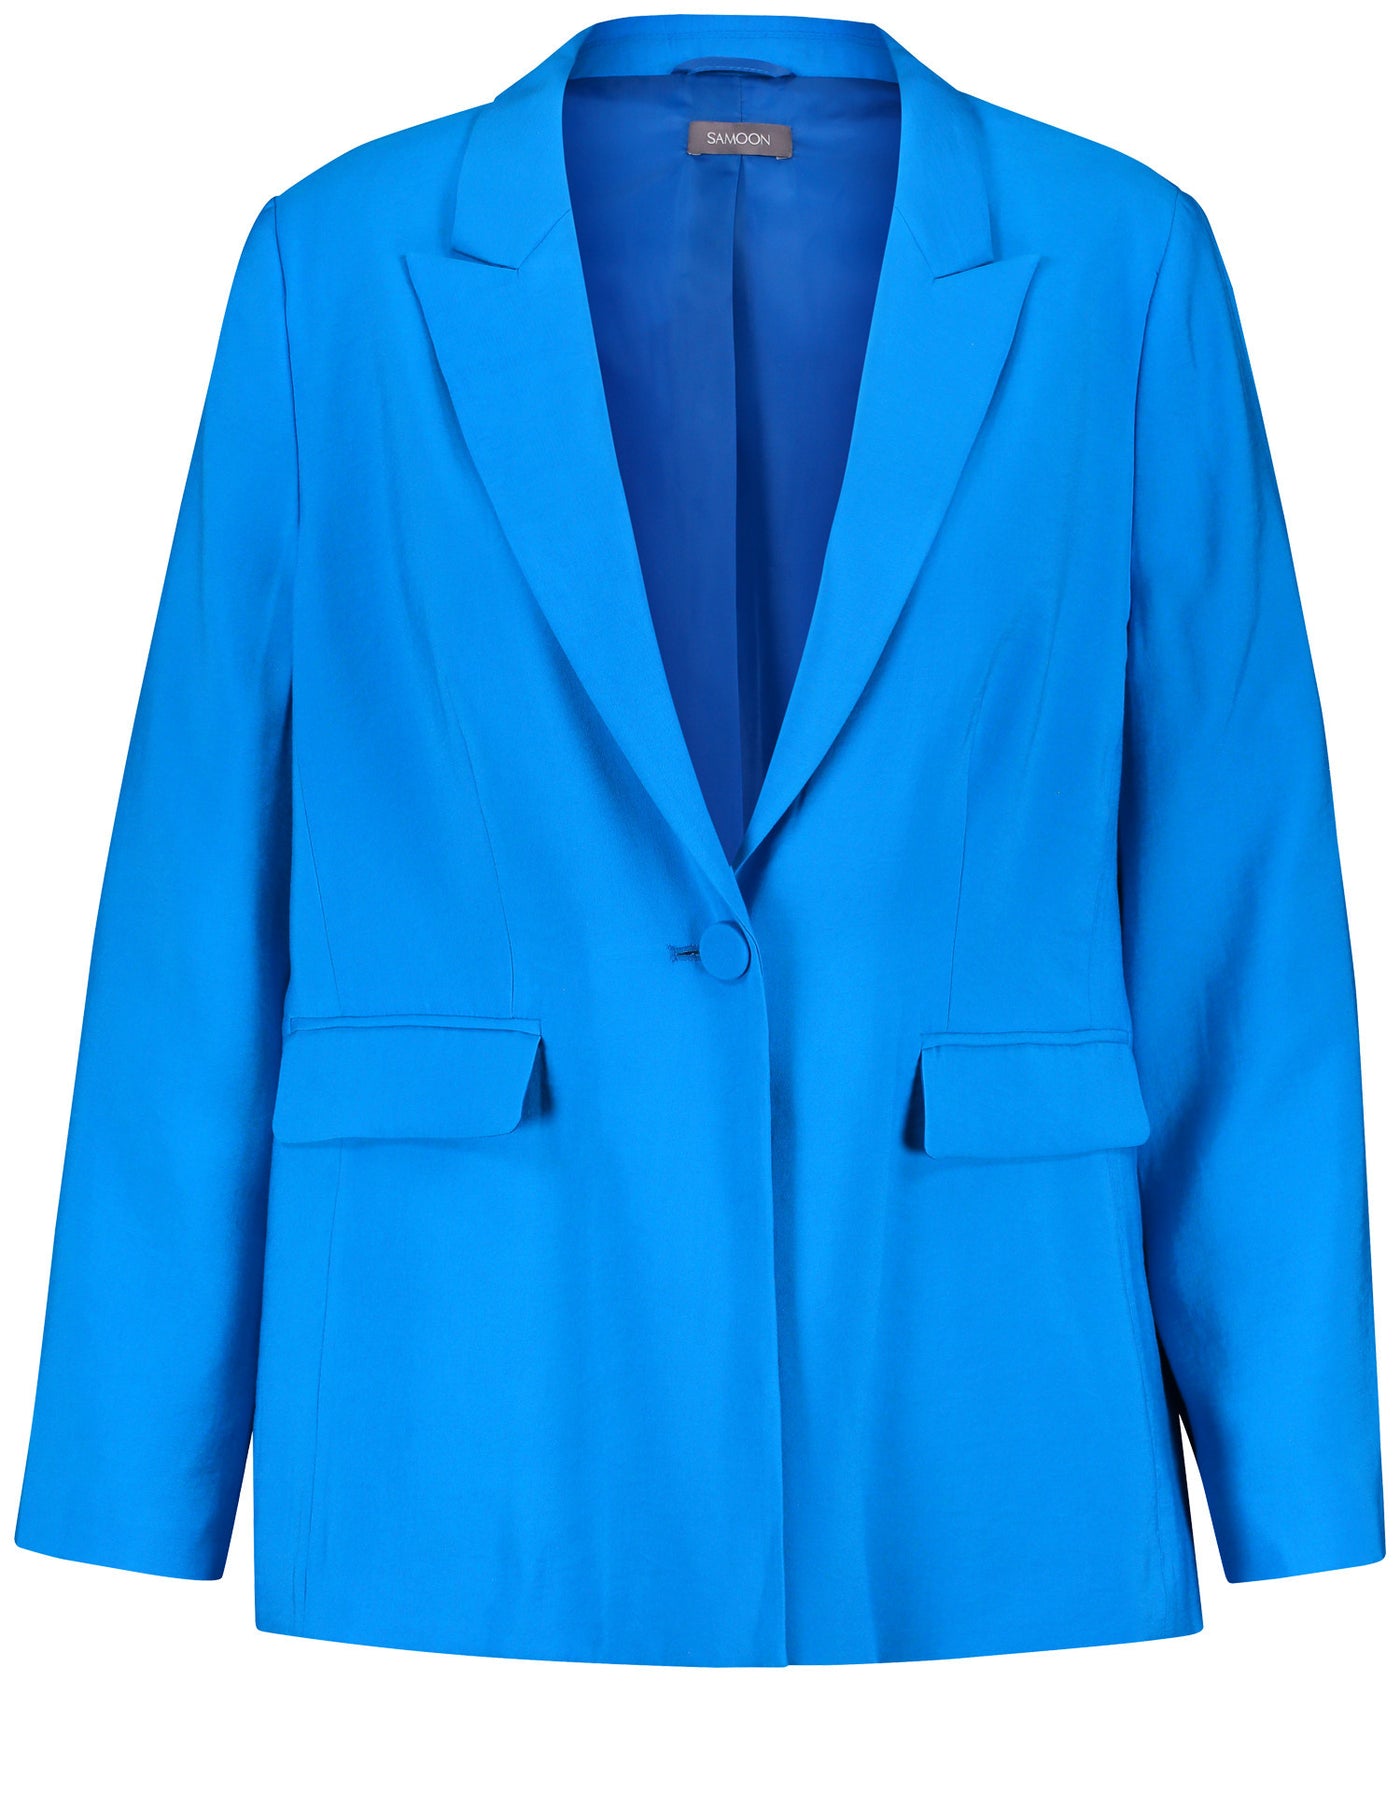 Samoon Long Sleeve Notch Collar One Button Blazer in Digital Blue